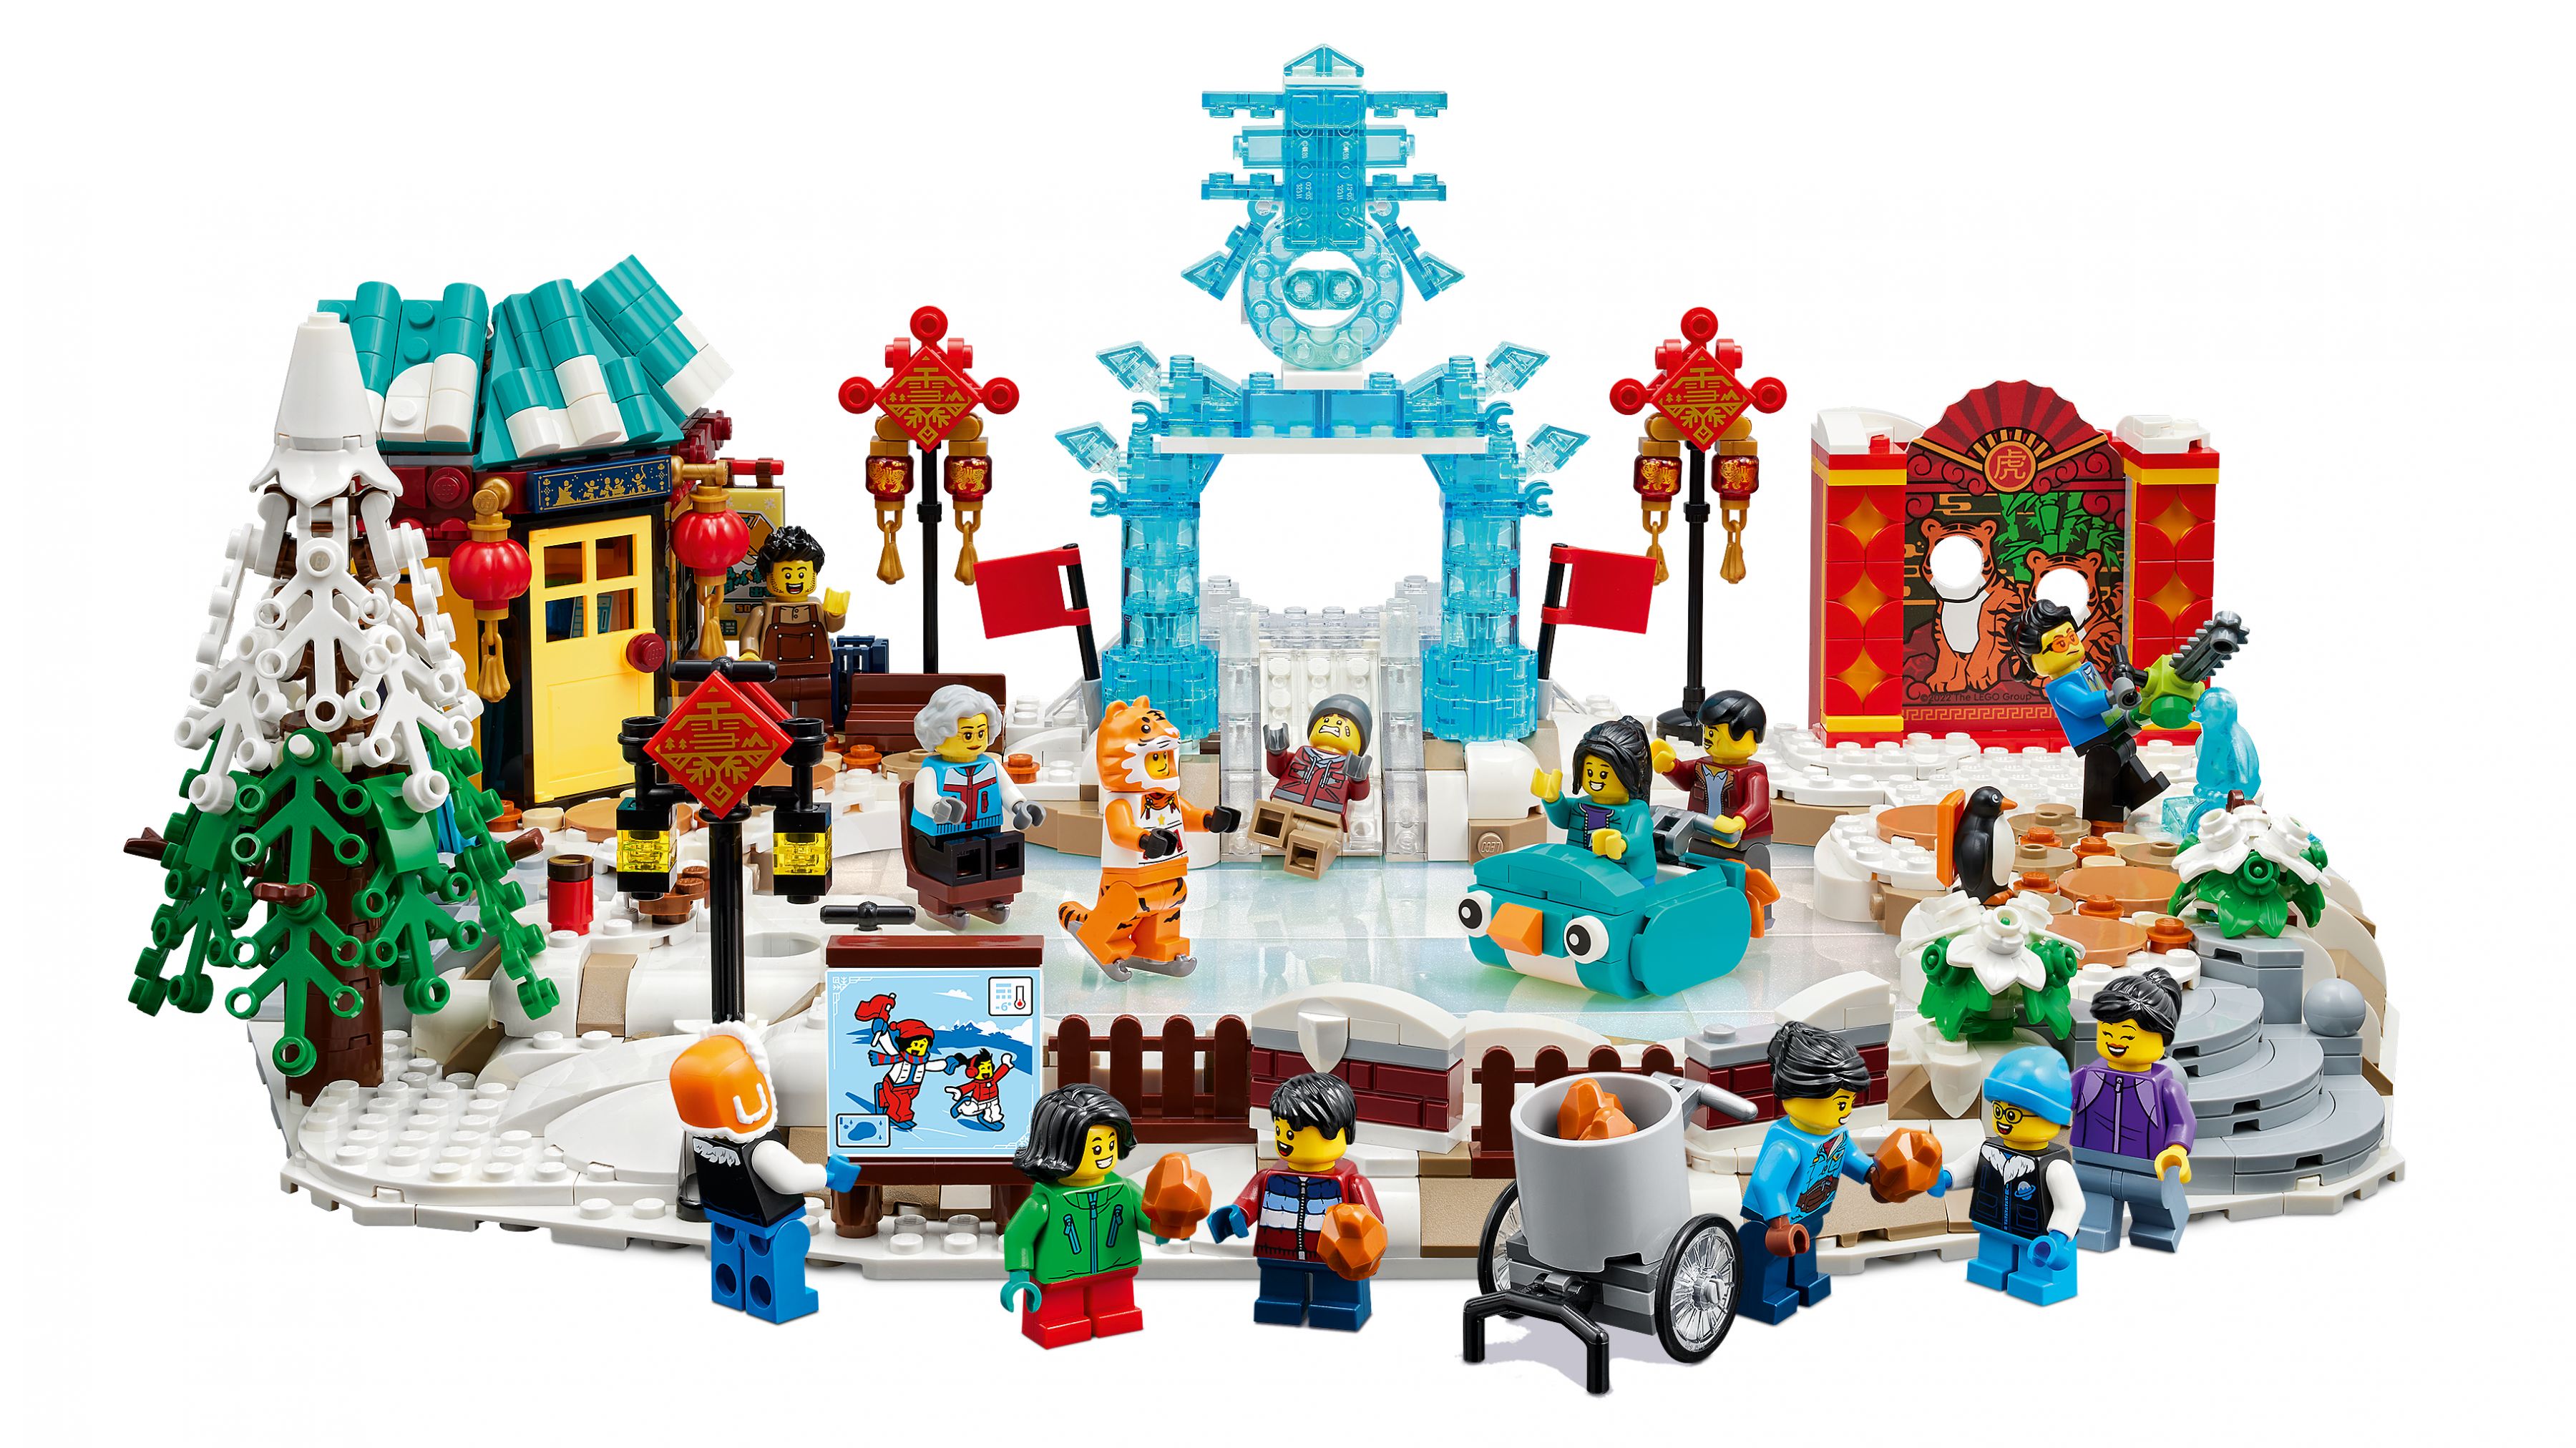 LEGO Seasonal 80109 Mondneujahrs-Eisfestival LEGO_80109_WEB_SEC02_NOBG.jpg